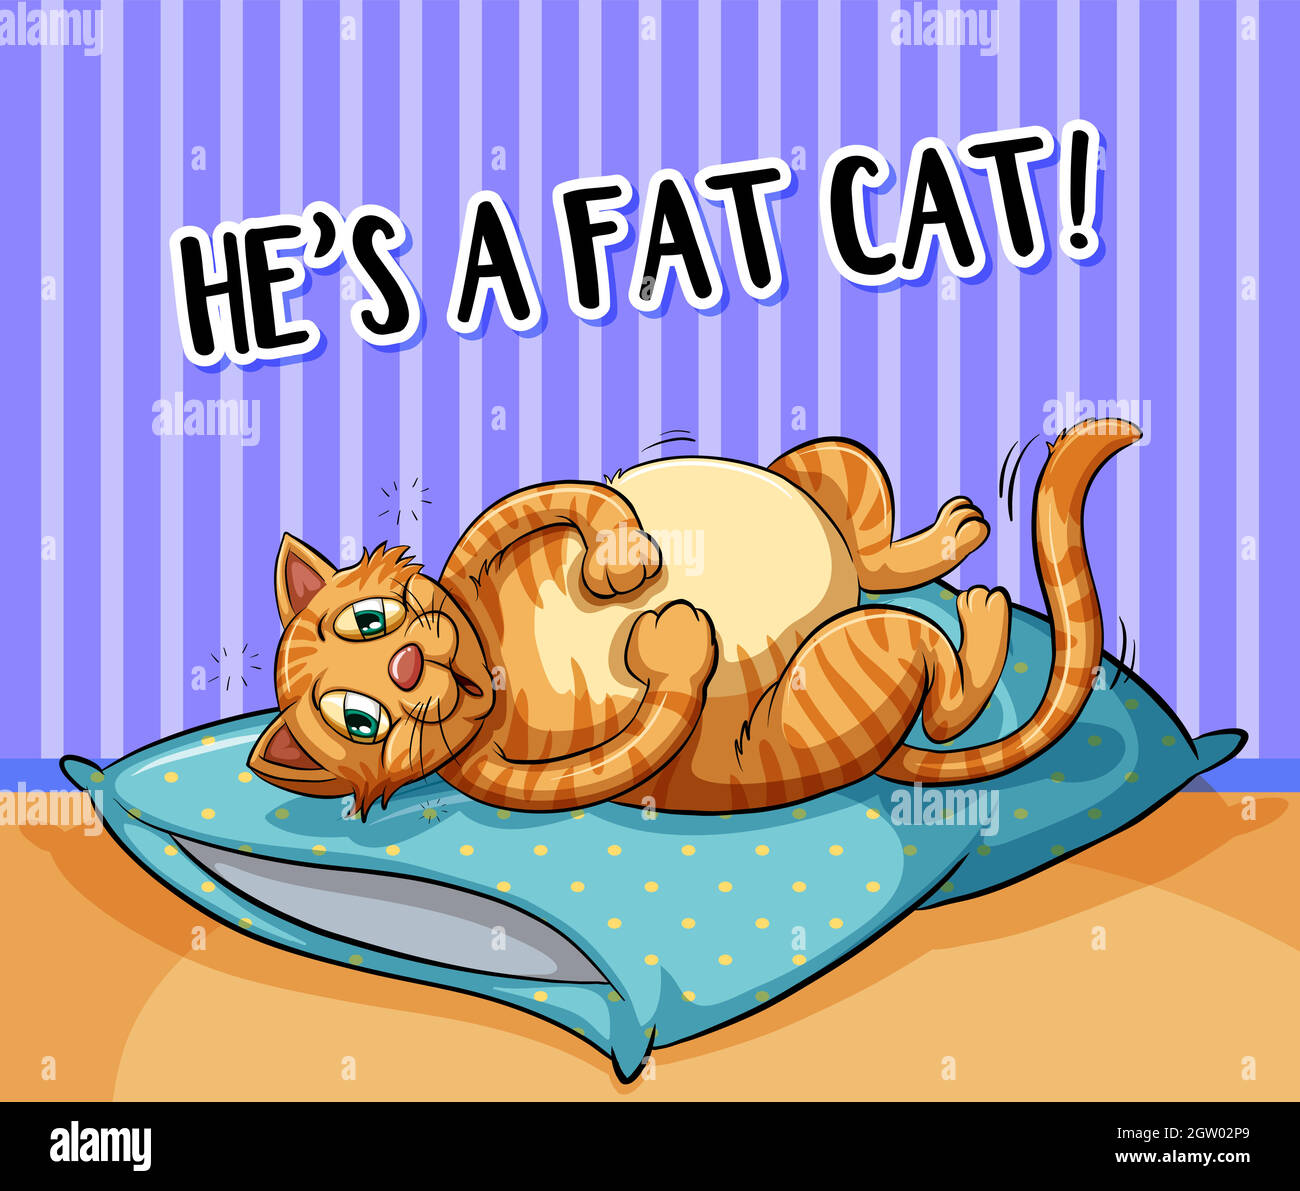 Idiom Poster mit fetter Katze Stock Vektor